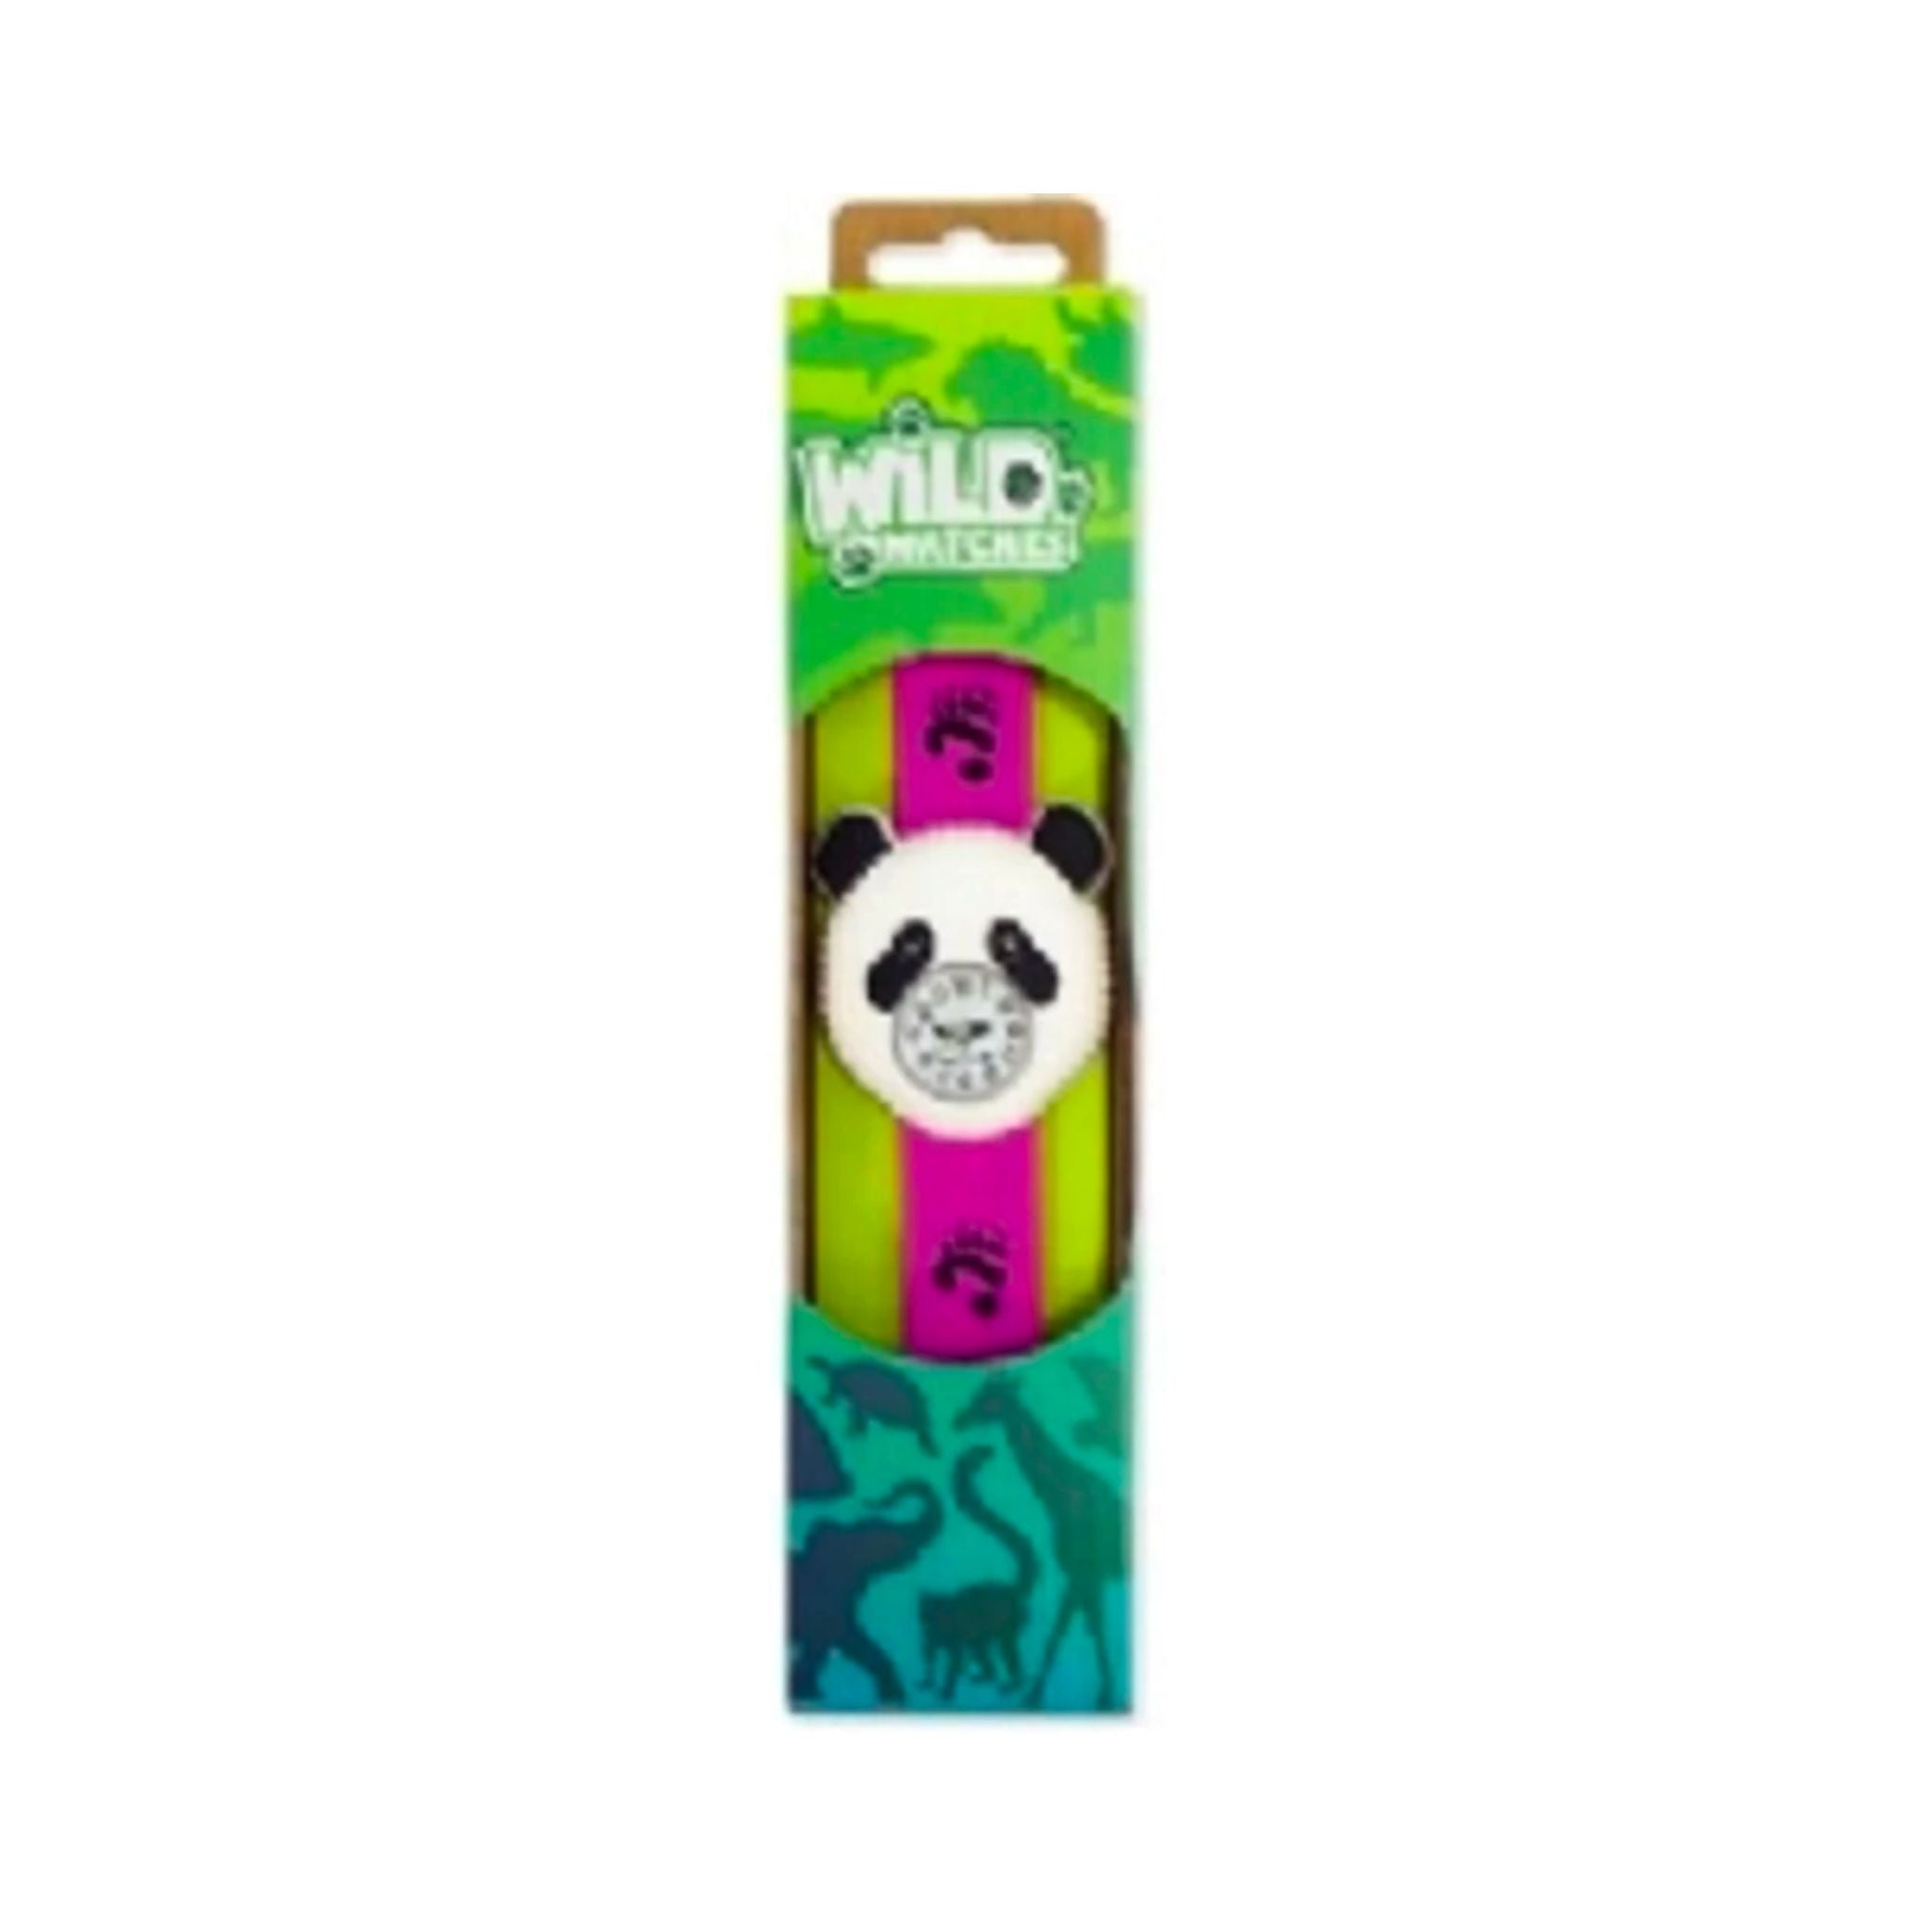 Wild Watches Panda Snap Band Watch